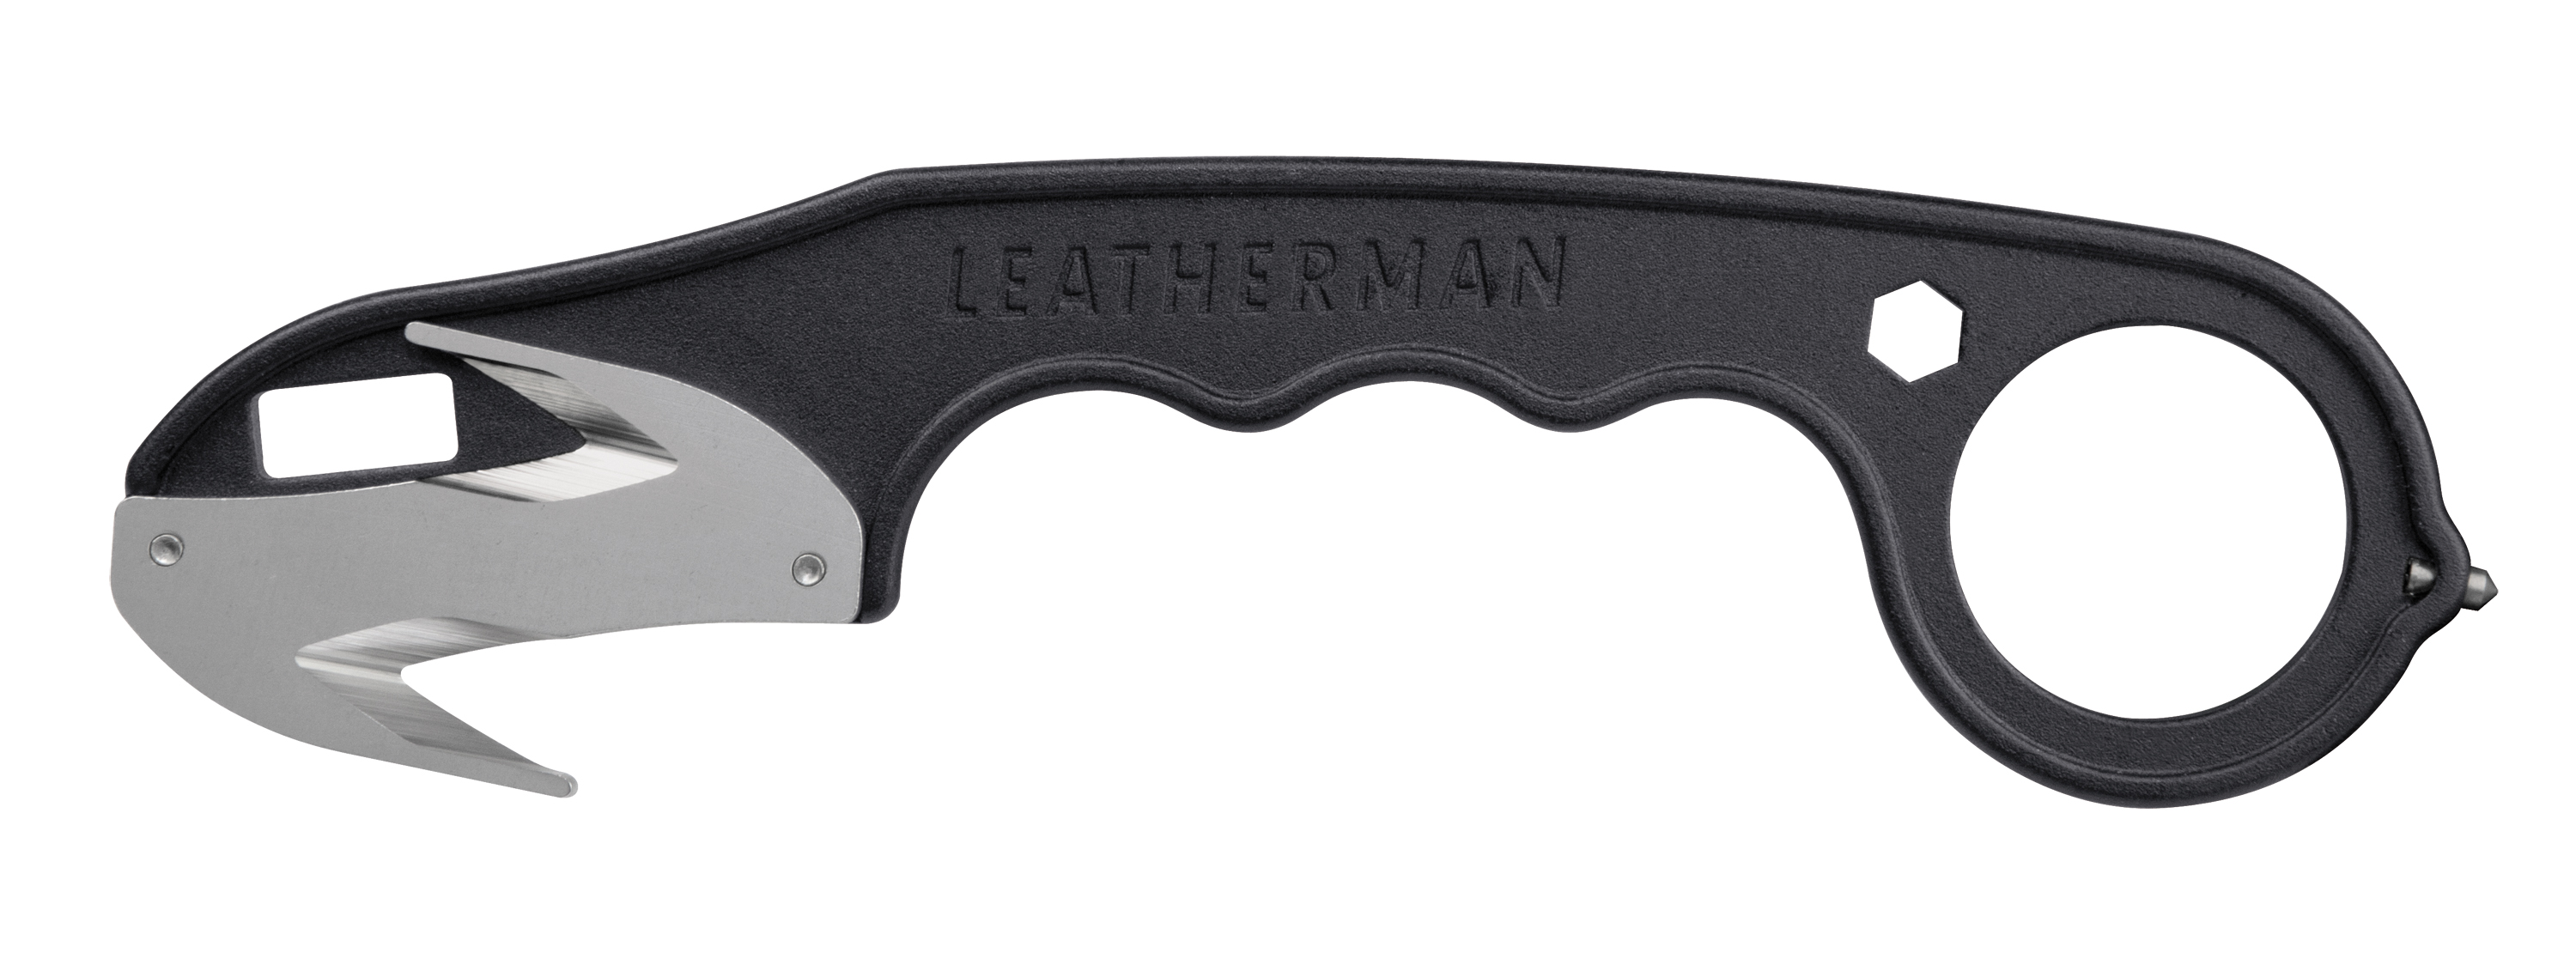 Leatherman Z-REX Emergency Multi-tool